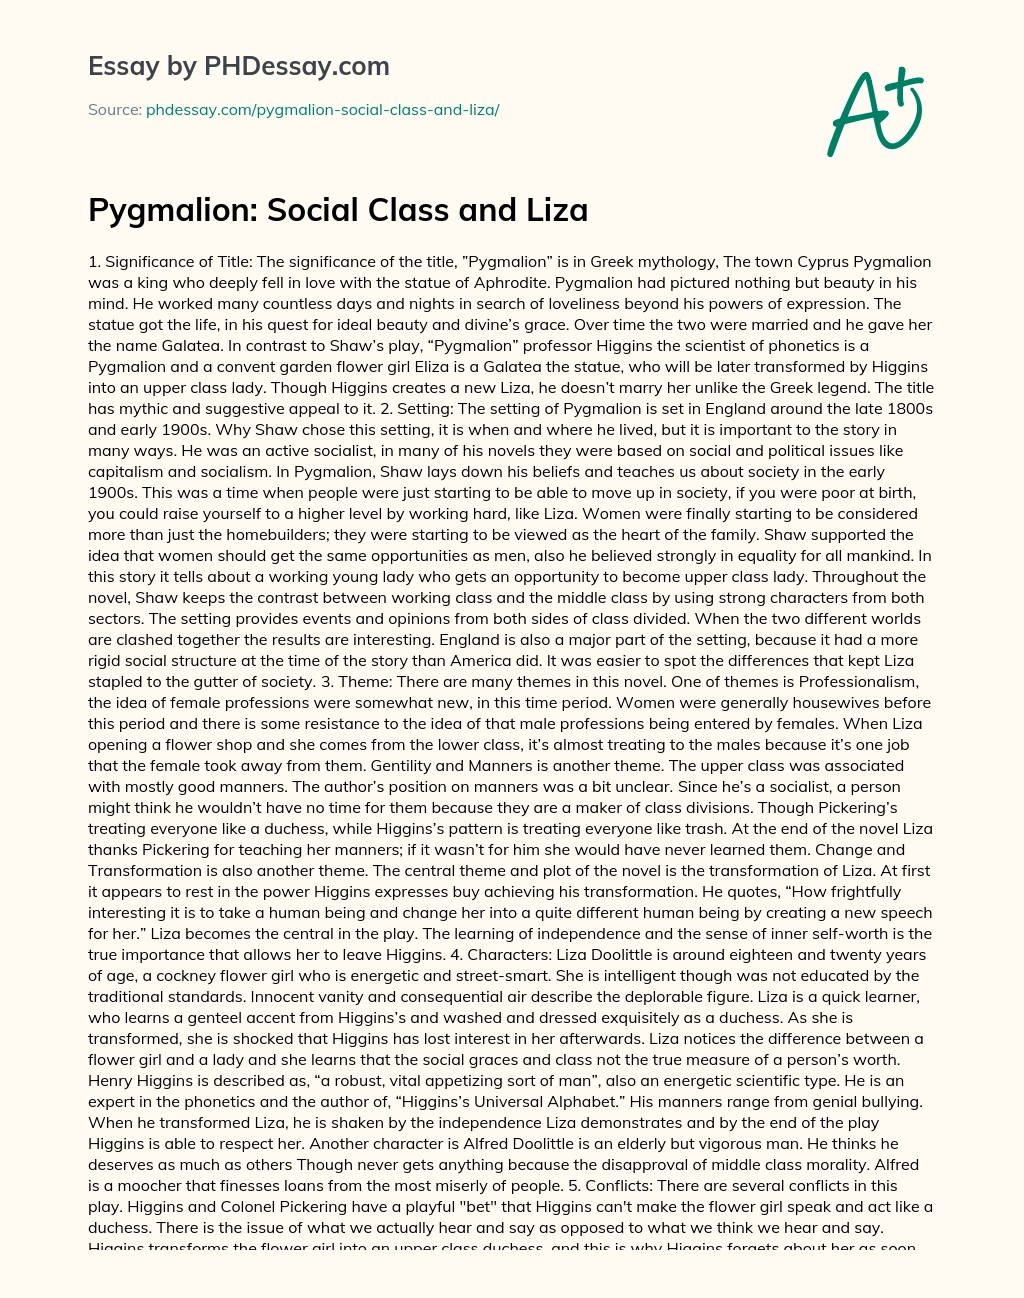 Pygmalion: Social Class and Liza essay